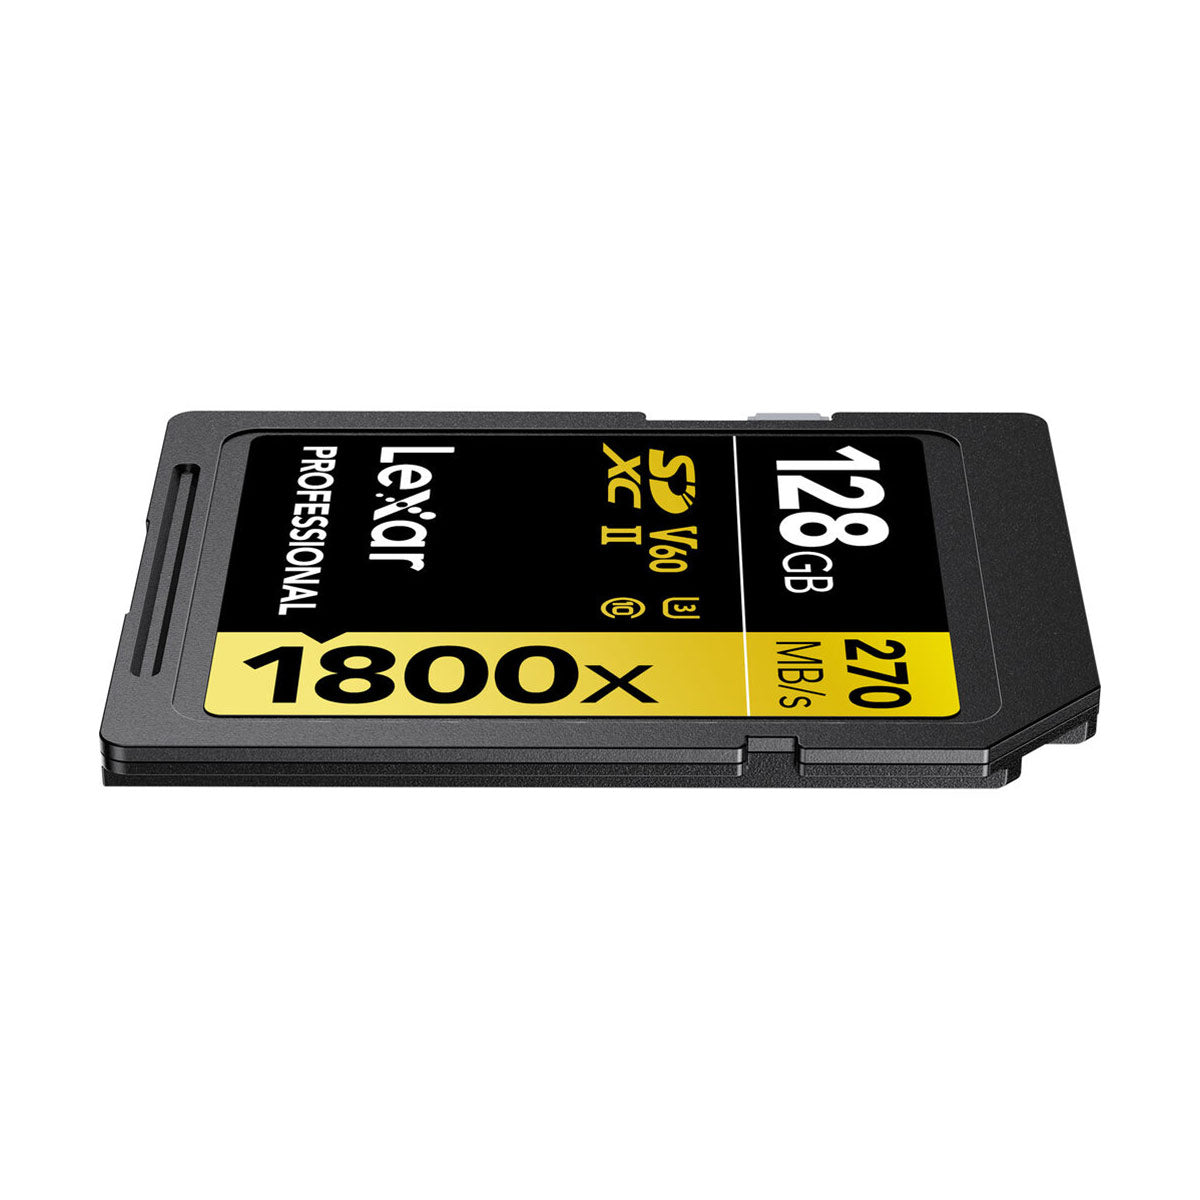 Lexar 128GB Professional 1800x UHS-II SDXC (V60) Memory Card